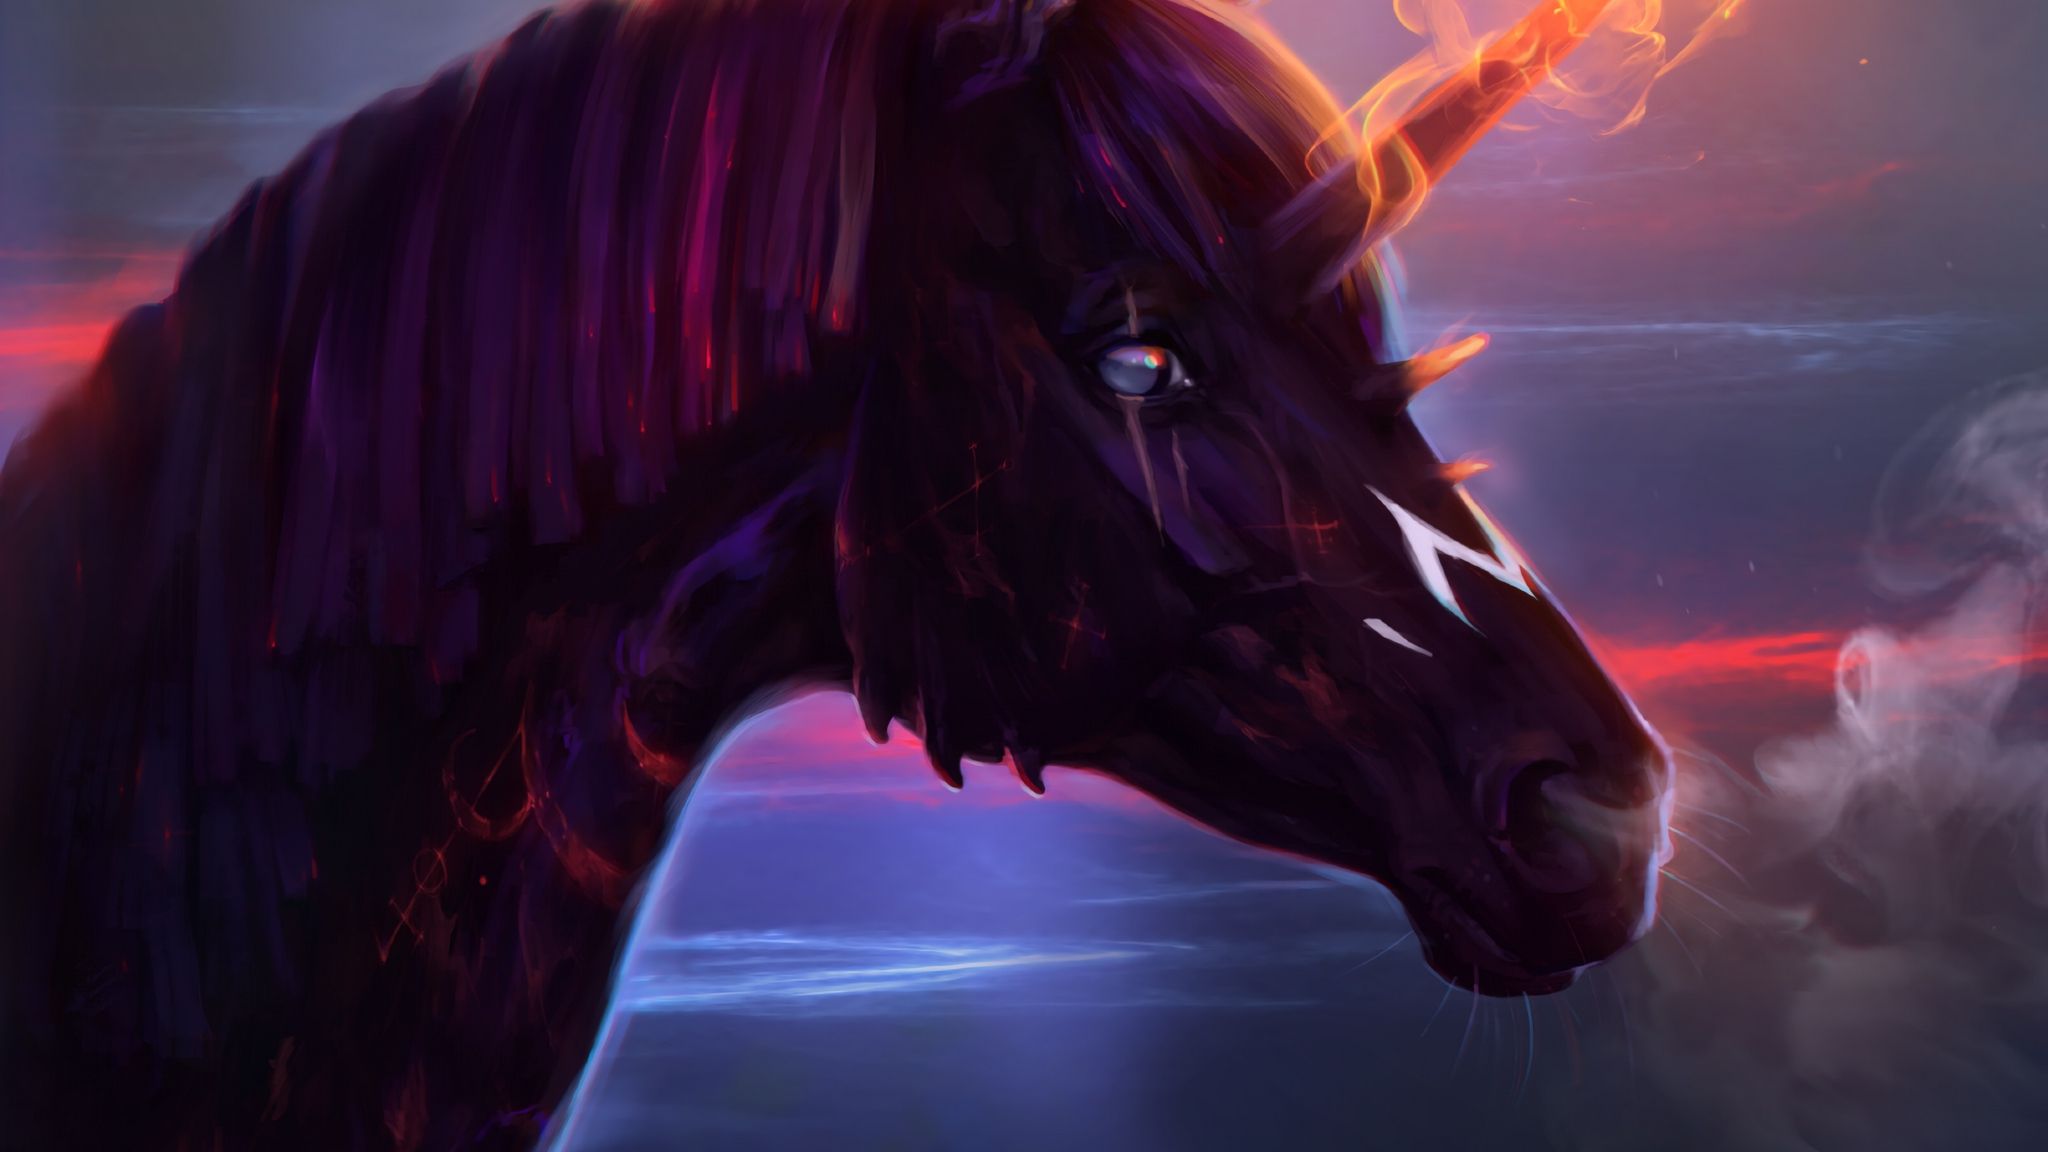 Wallpaper Unicorn, Horse, Art, Fire Horse Wallpaper For iPhone Wallpaper & Background Download